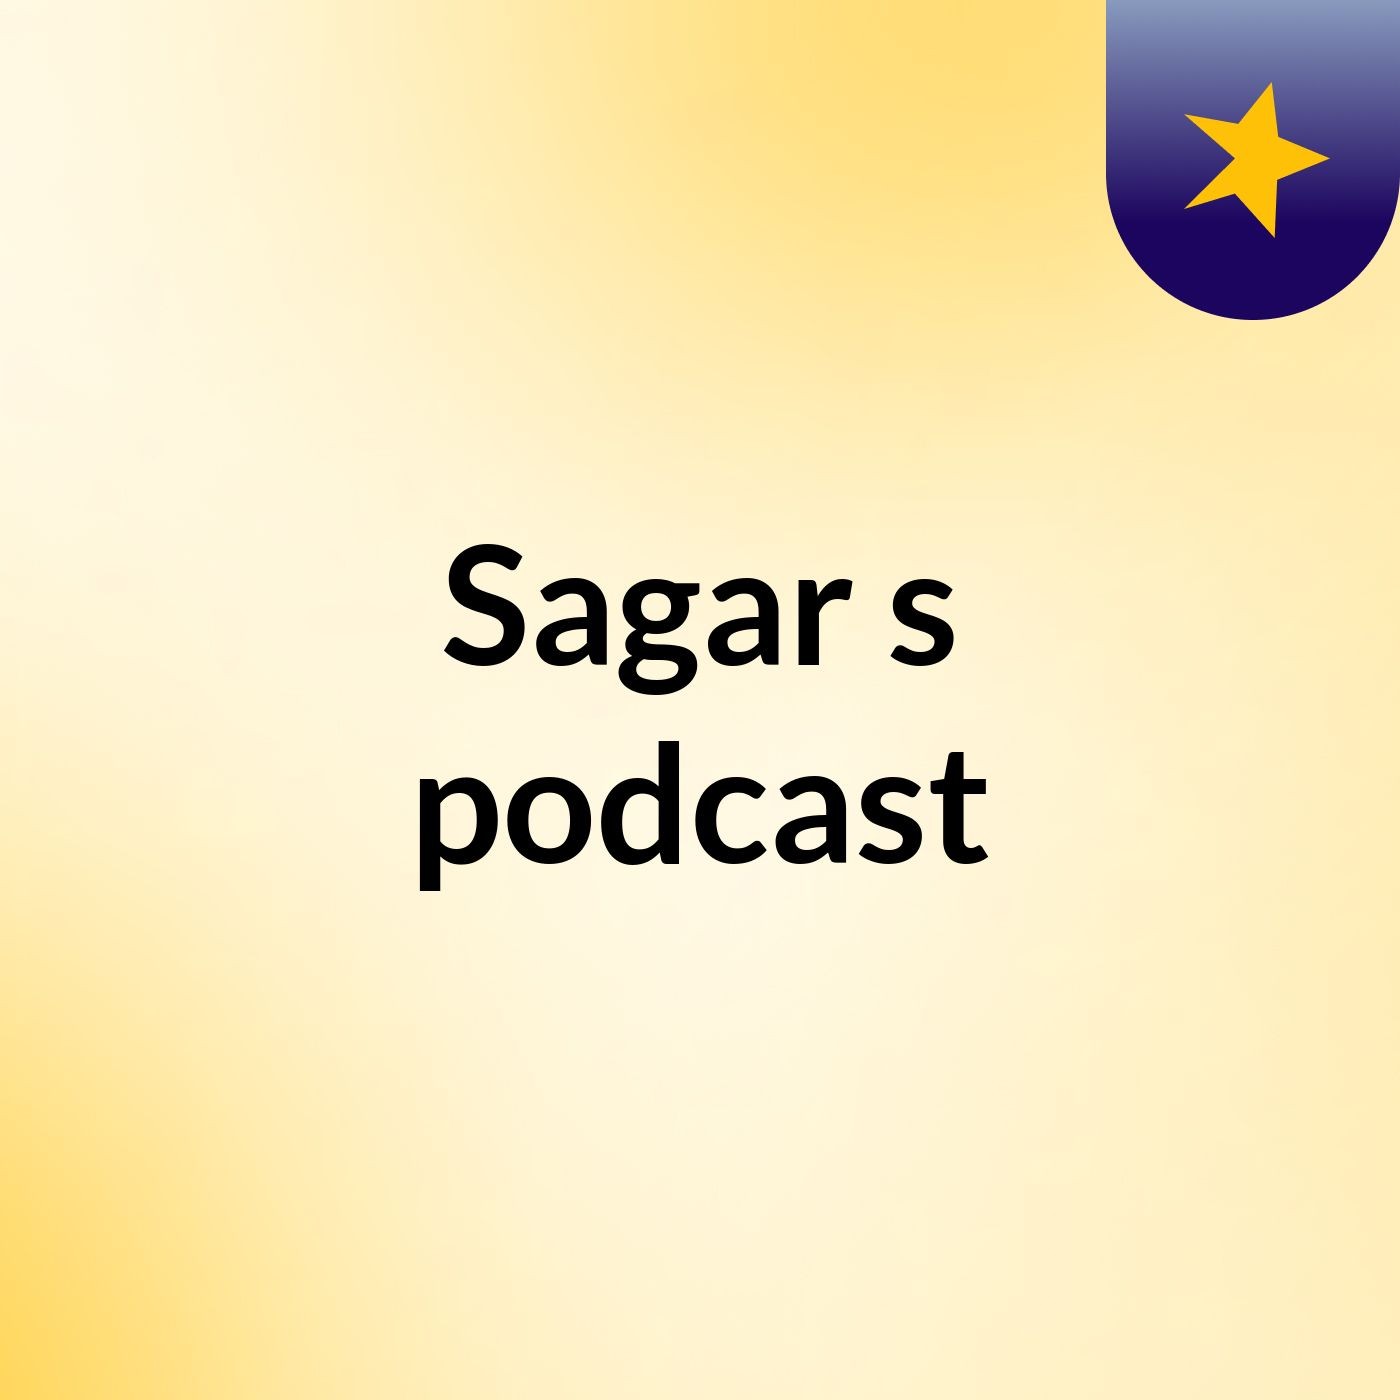 Episode 5 - Sagar's podcast